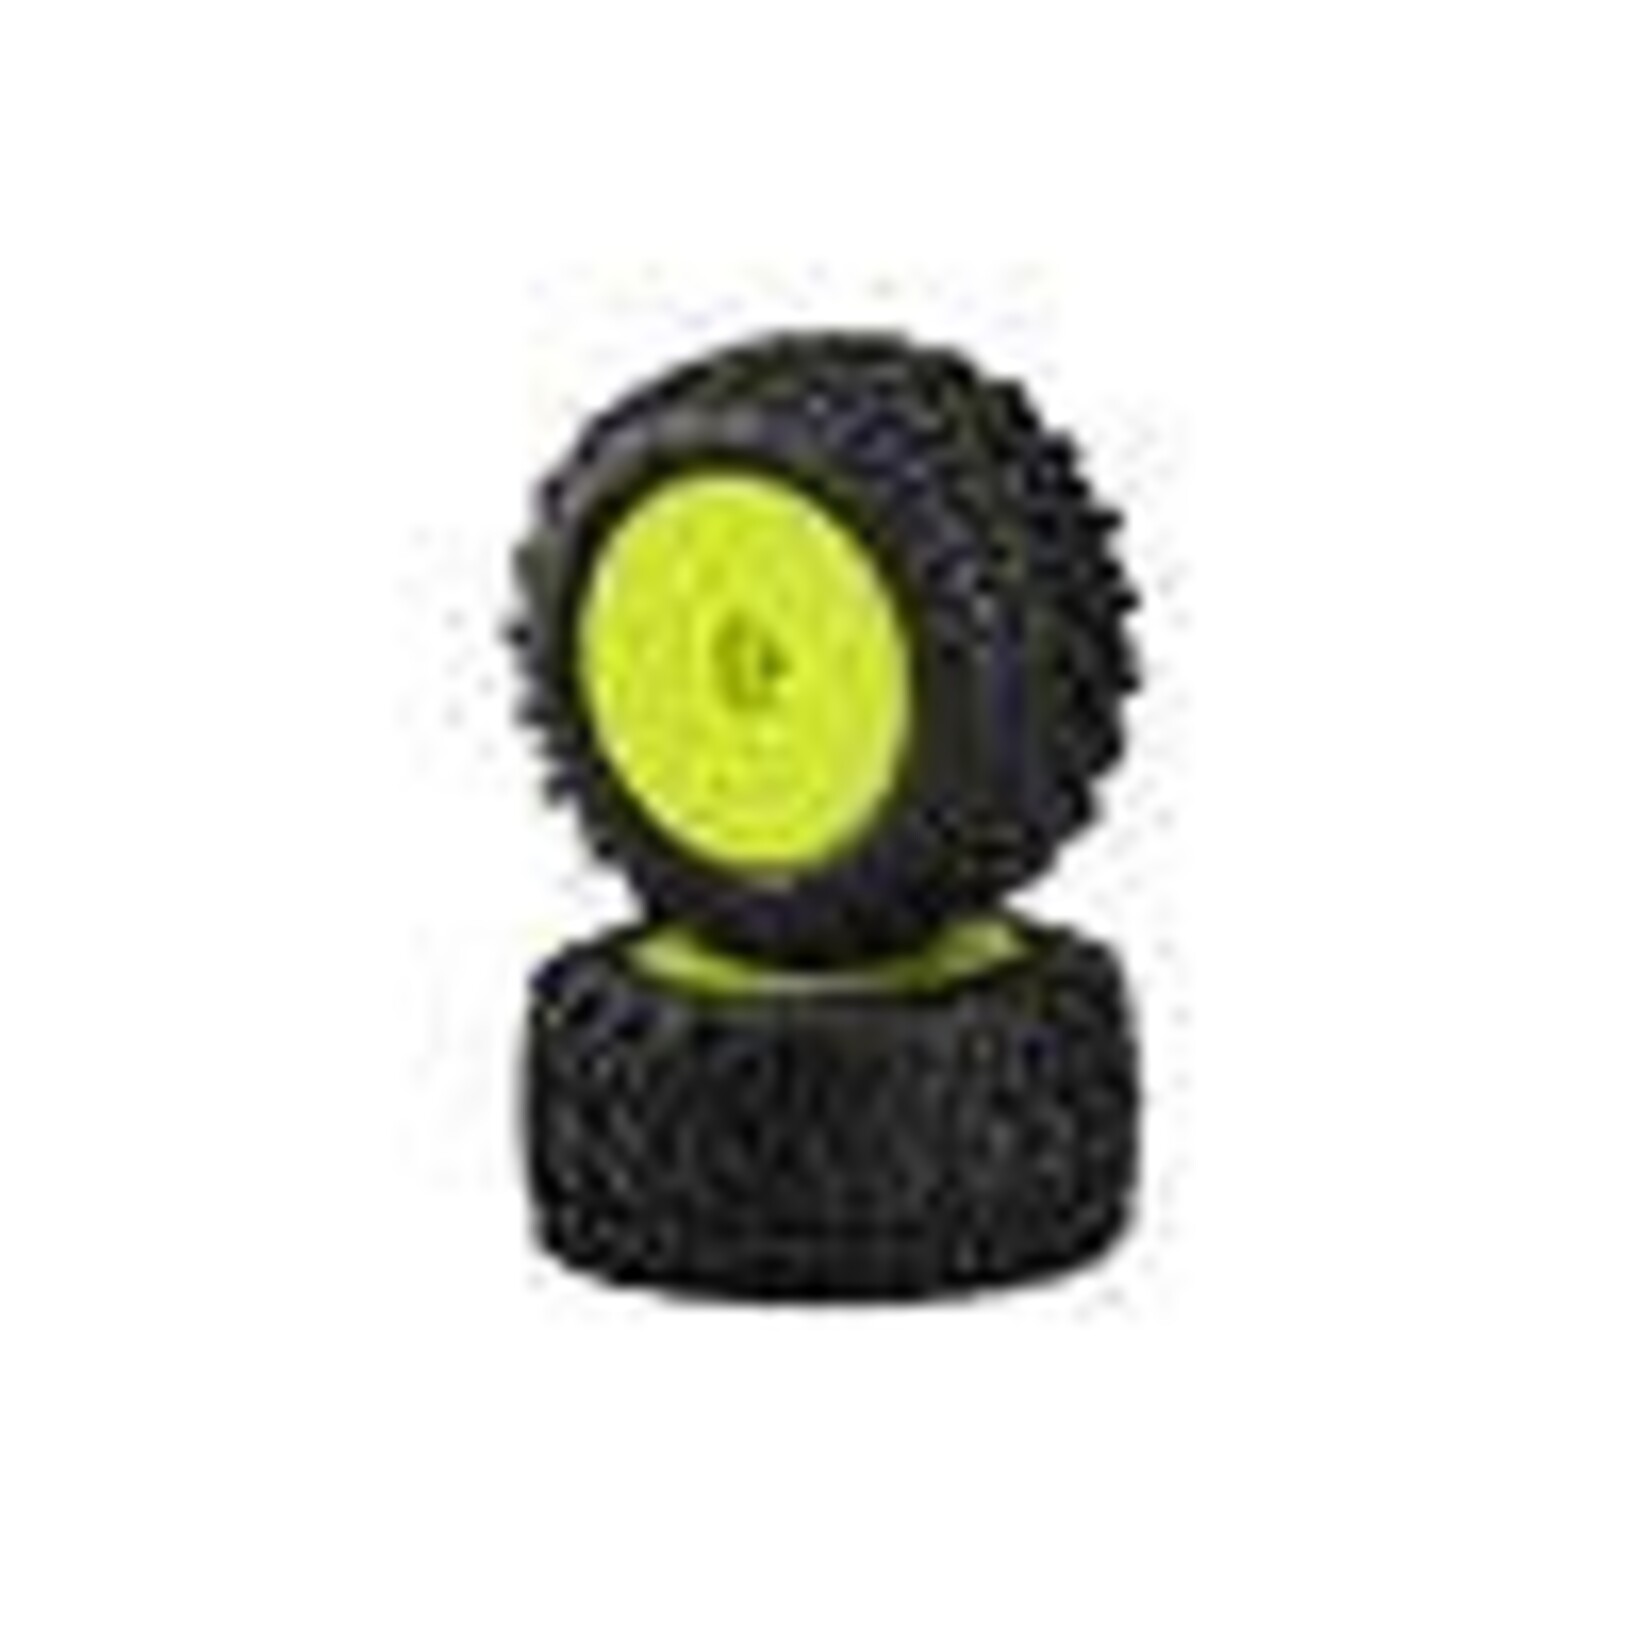 J Concepts JCO31002221  Scorpios Tires, Mounted Yellow Wheels, Green Compound (2): Mini-T/B